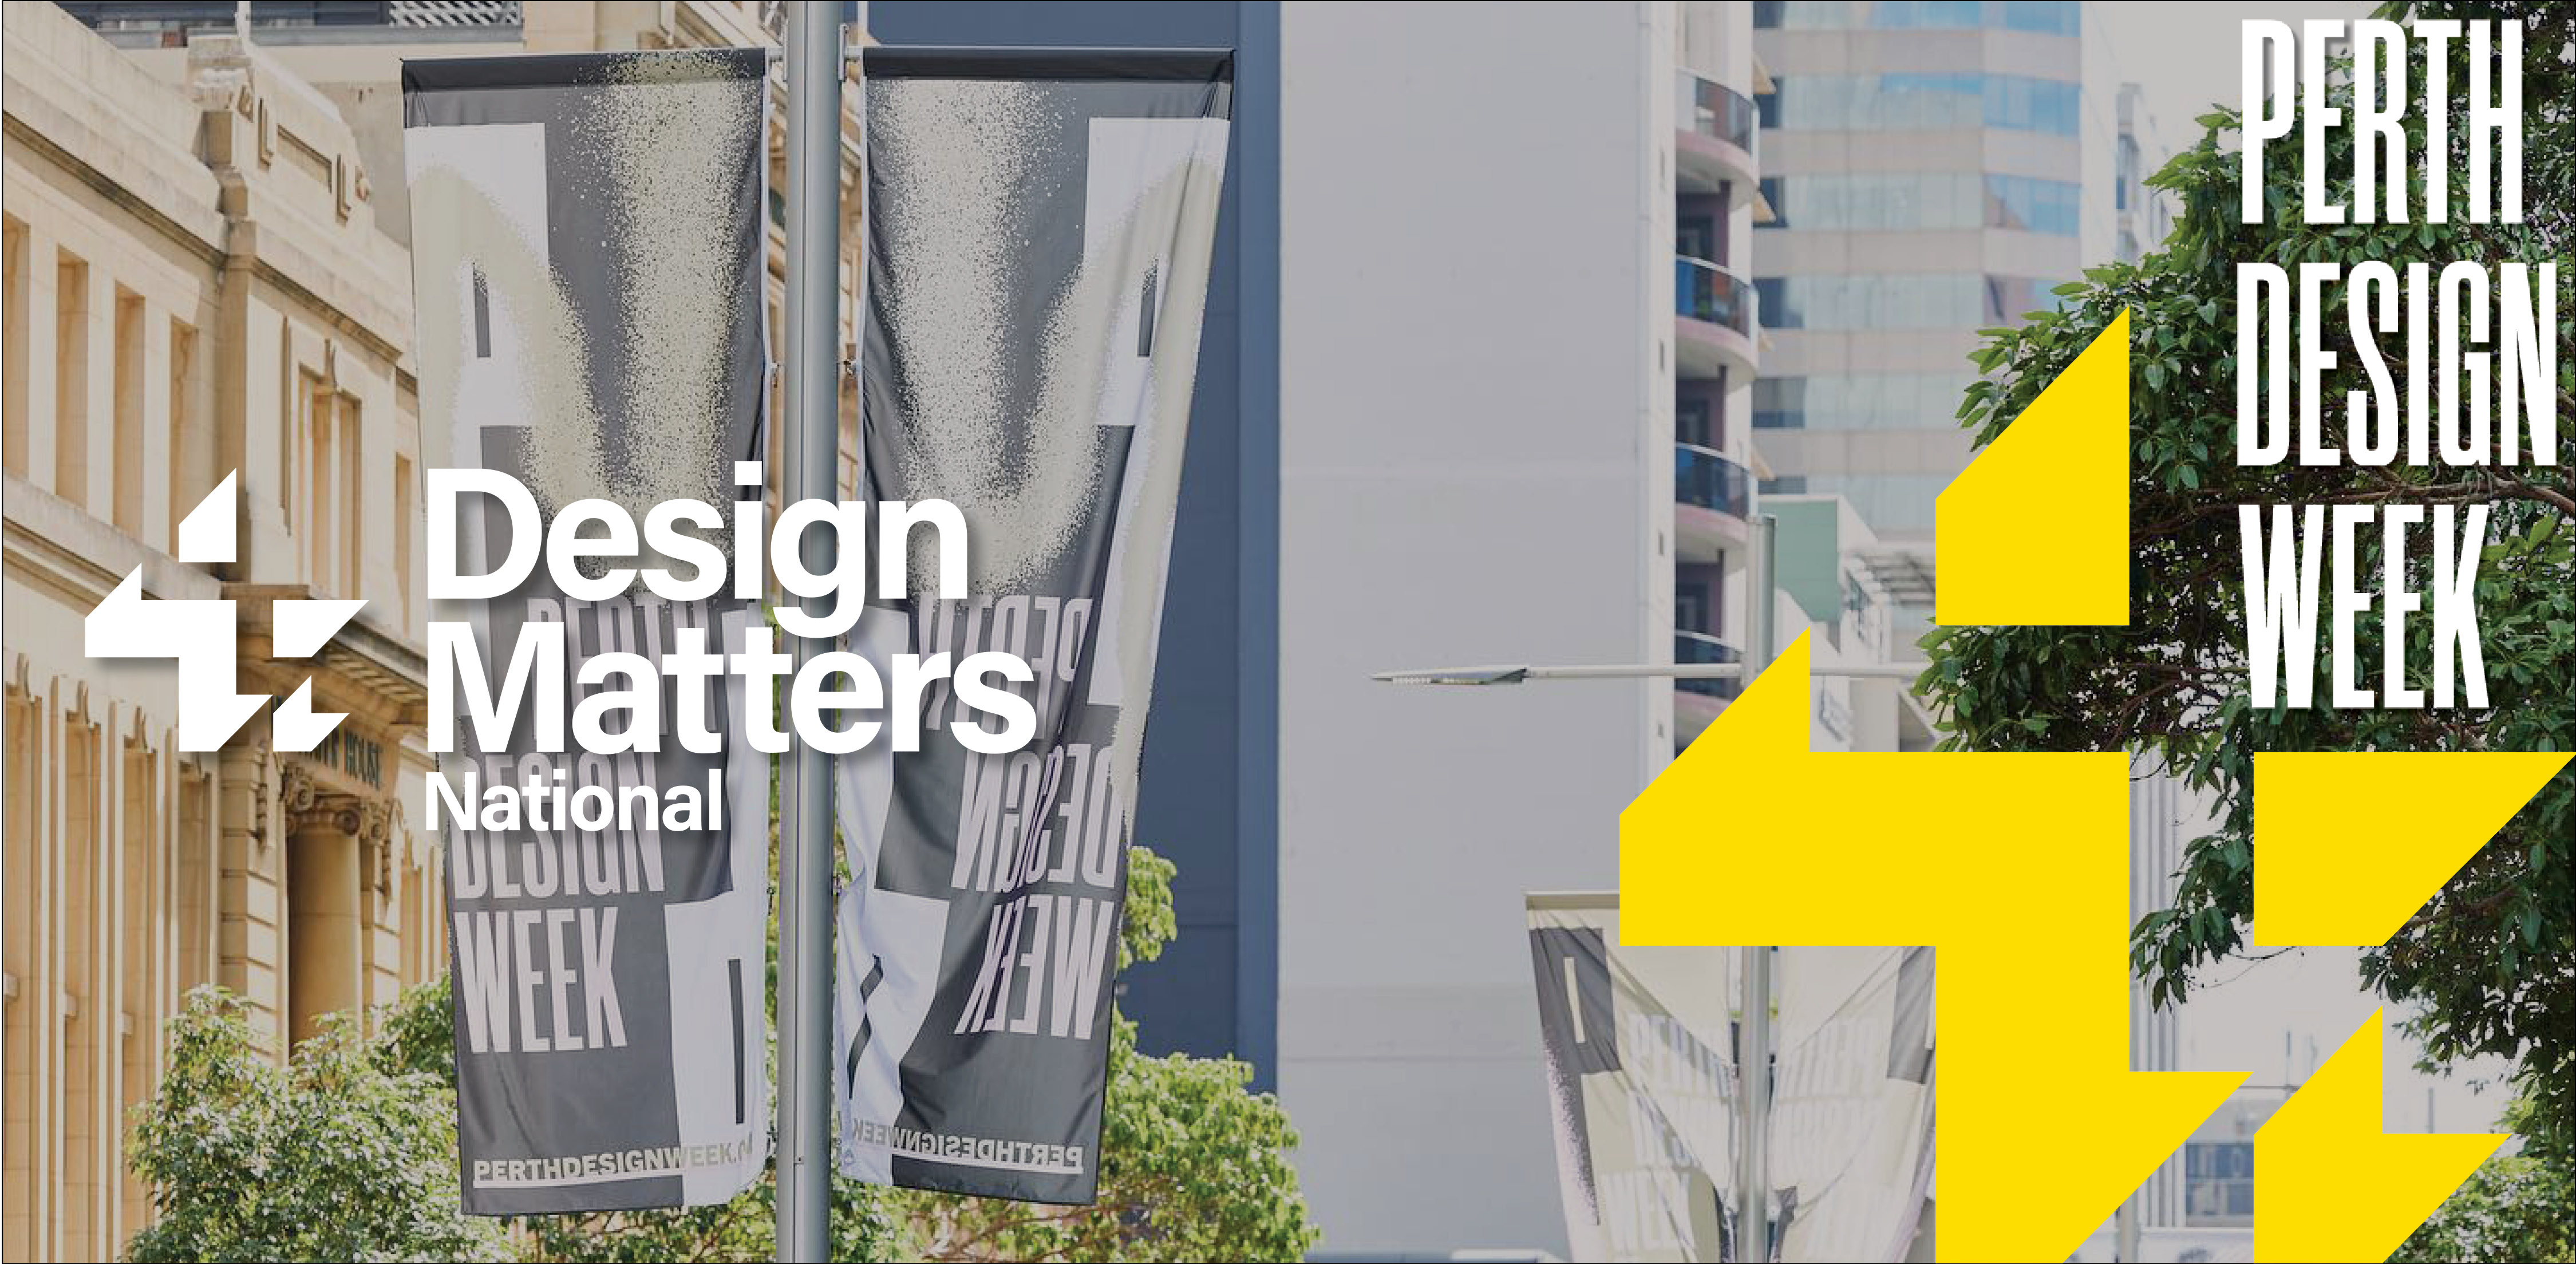 Perth Design Week, a vibrant celebration of design returns